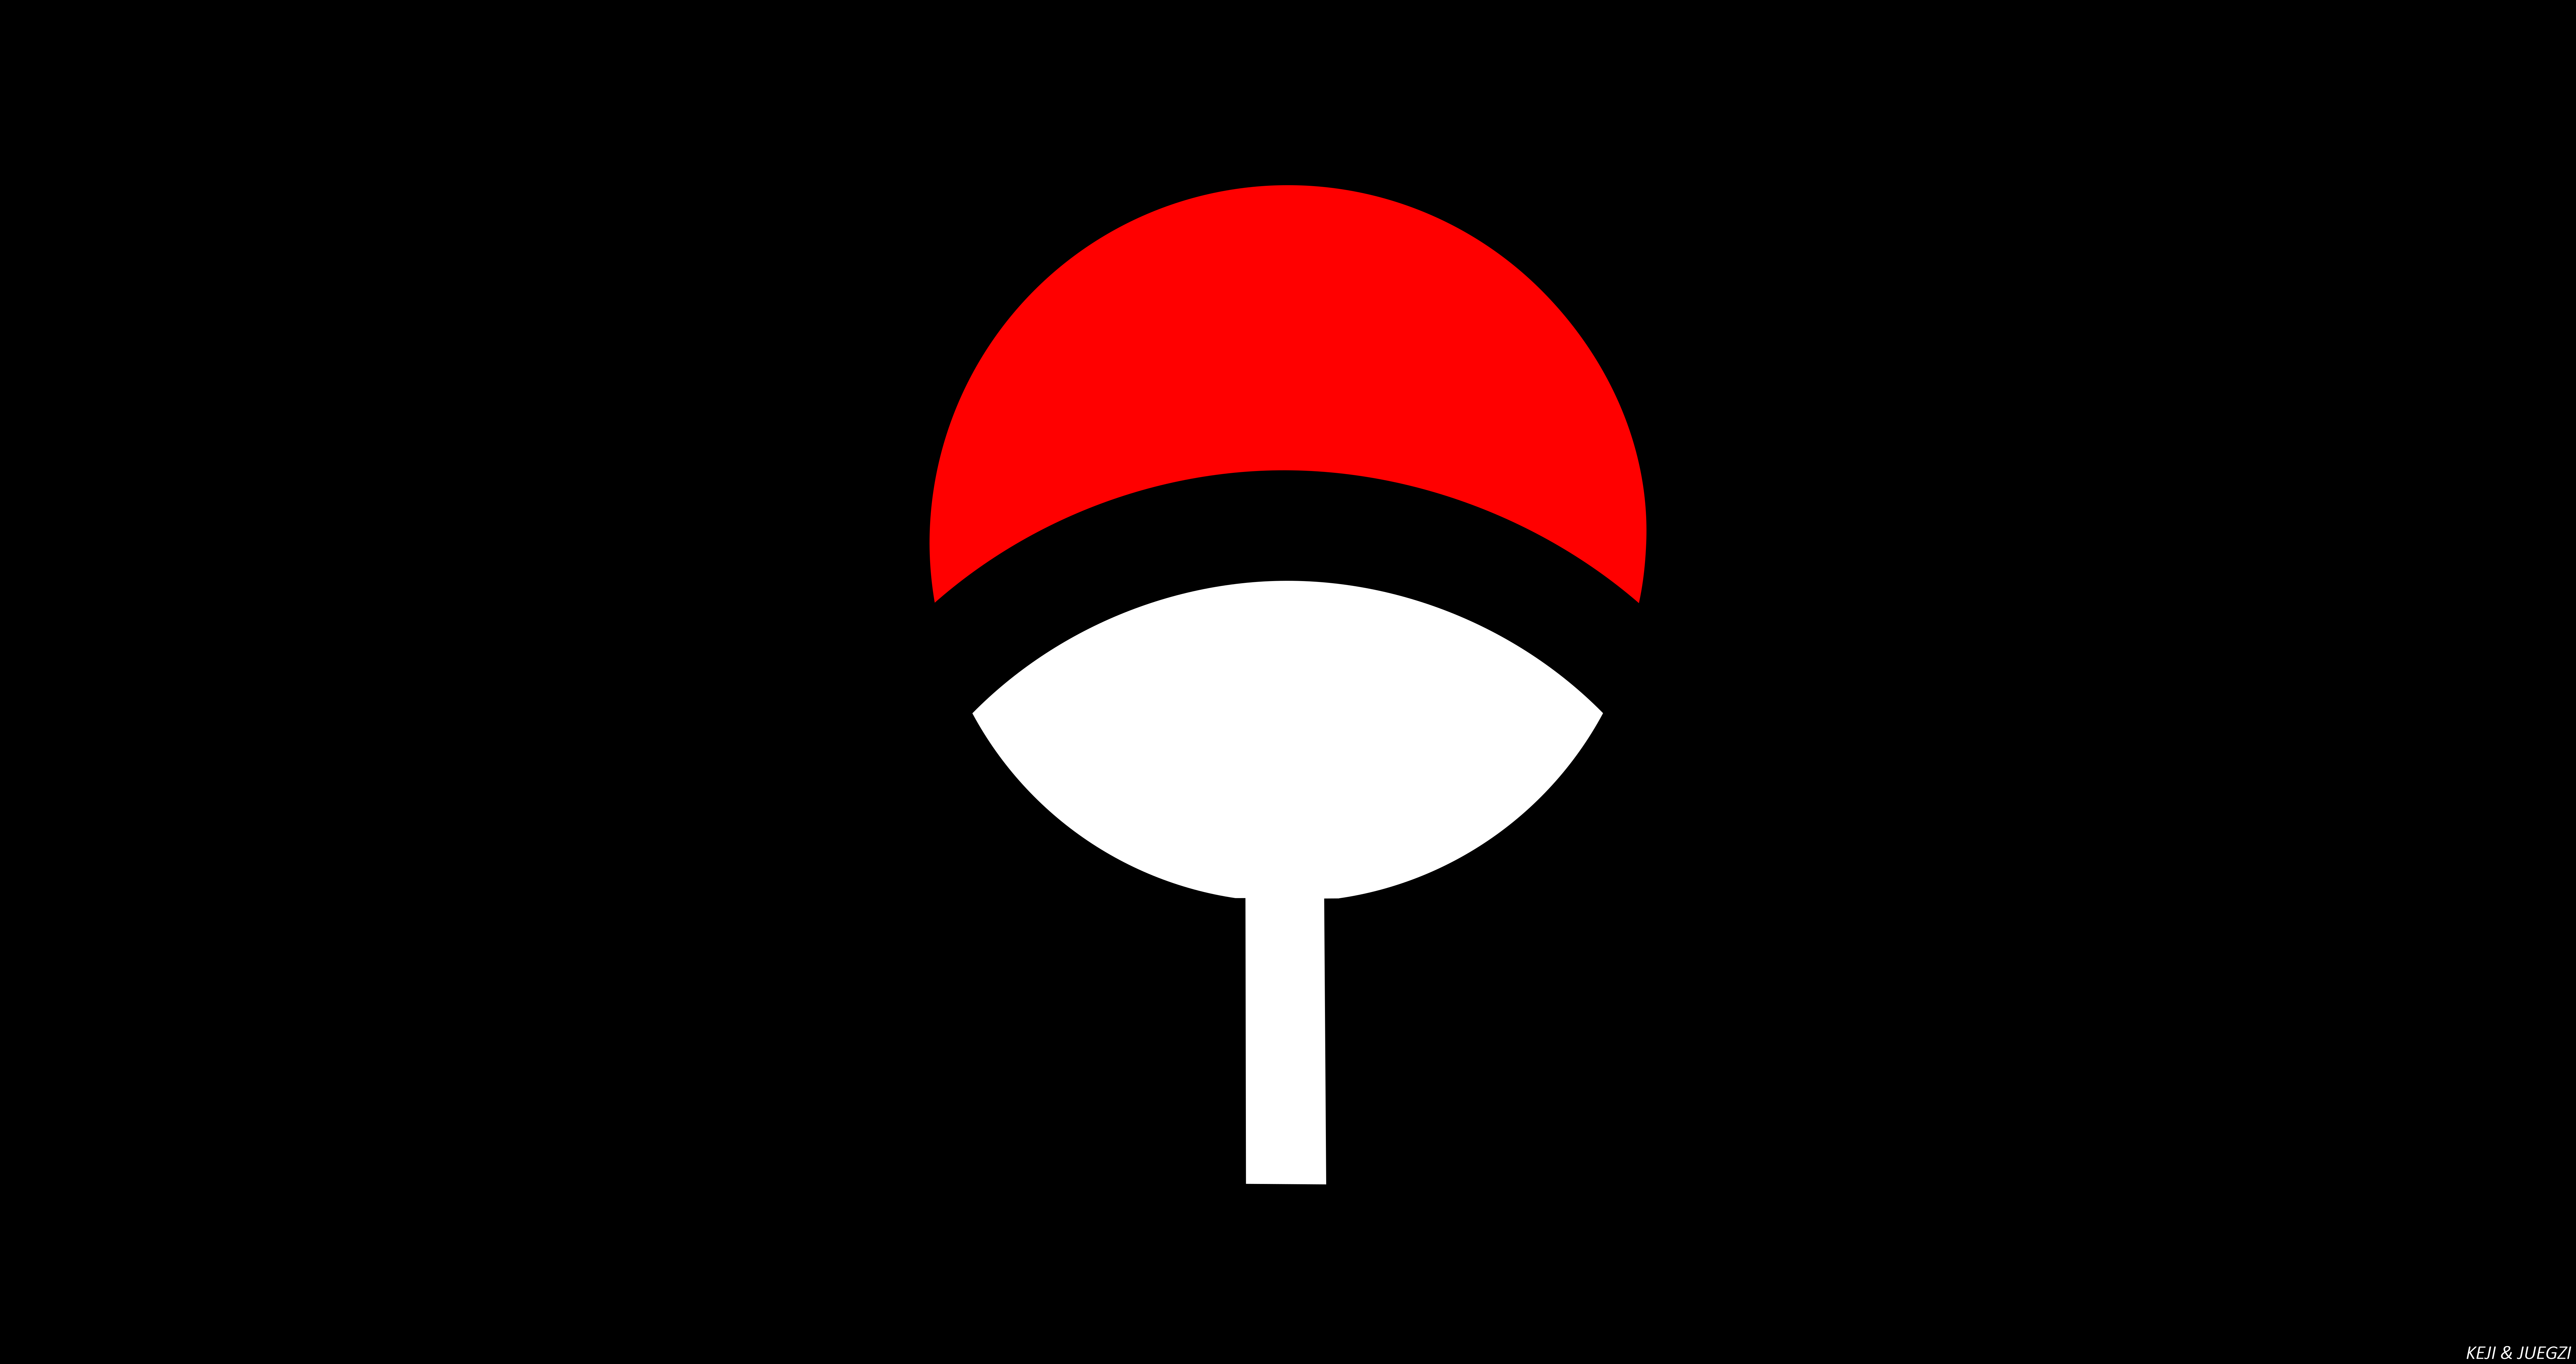 uchiha symbol wallpaper,red,illustration,graphic design,logo,graphics